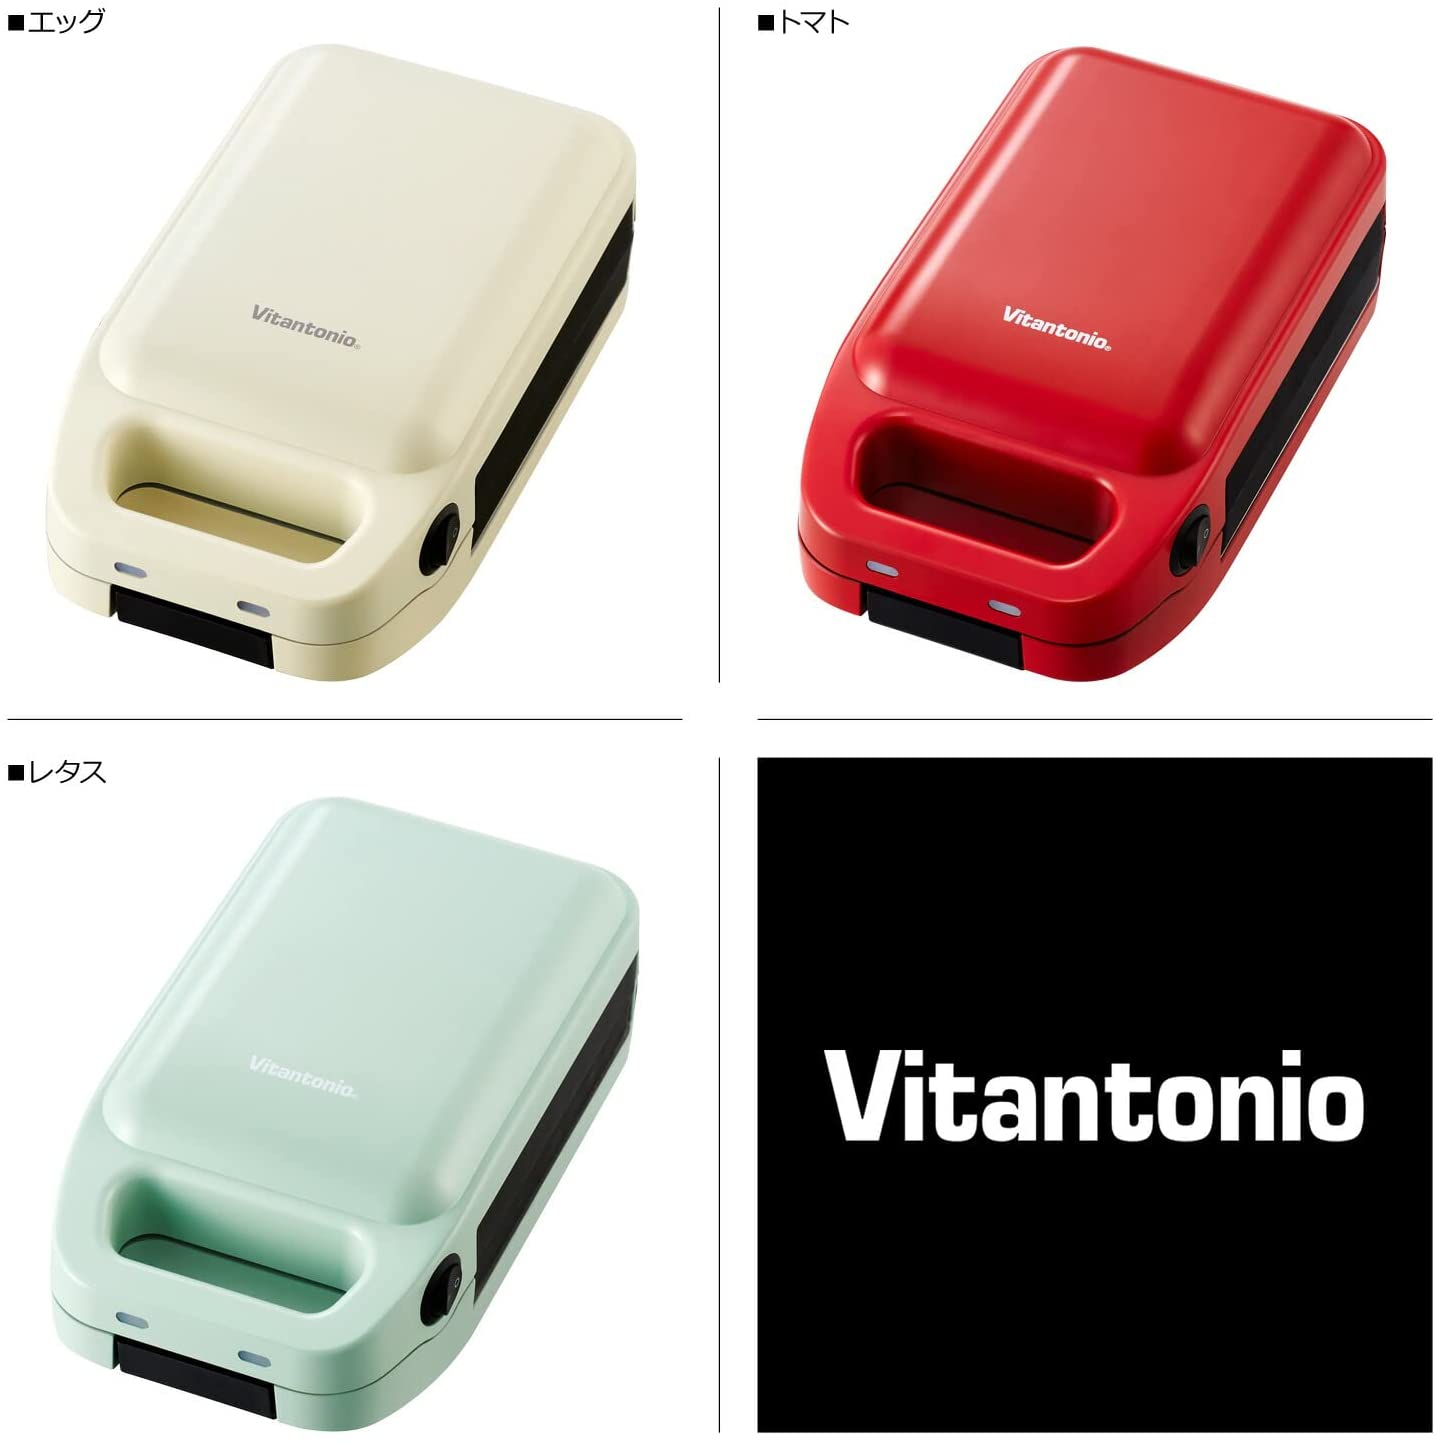 Vitantonio(ビタントニオ) 厚焼きホットサンドベーカー“グード” VHS-10の商品画像2 